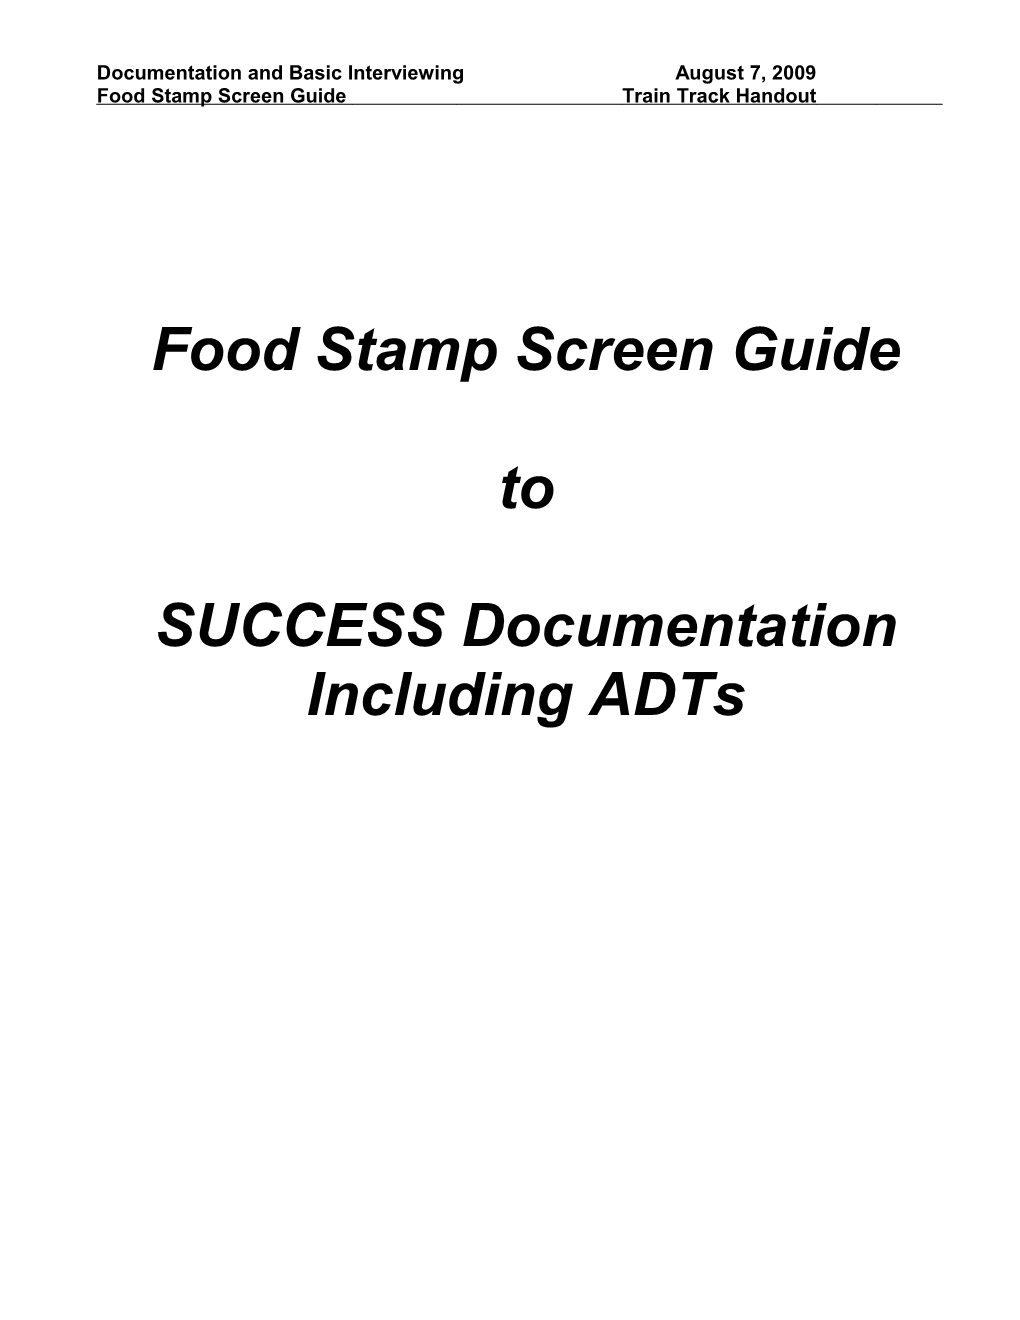 Food Stamp Screen Guidetrain Track Handout